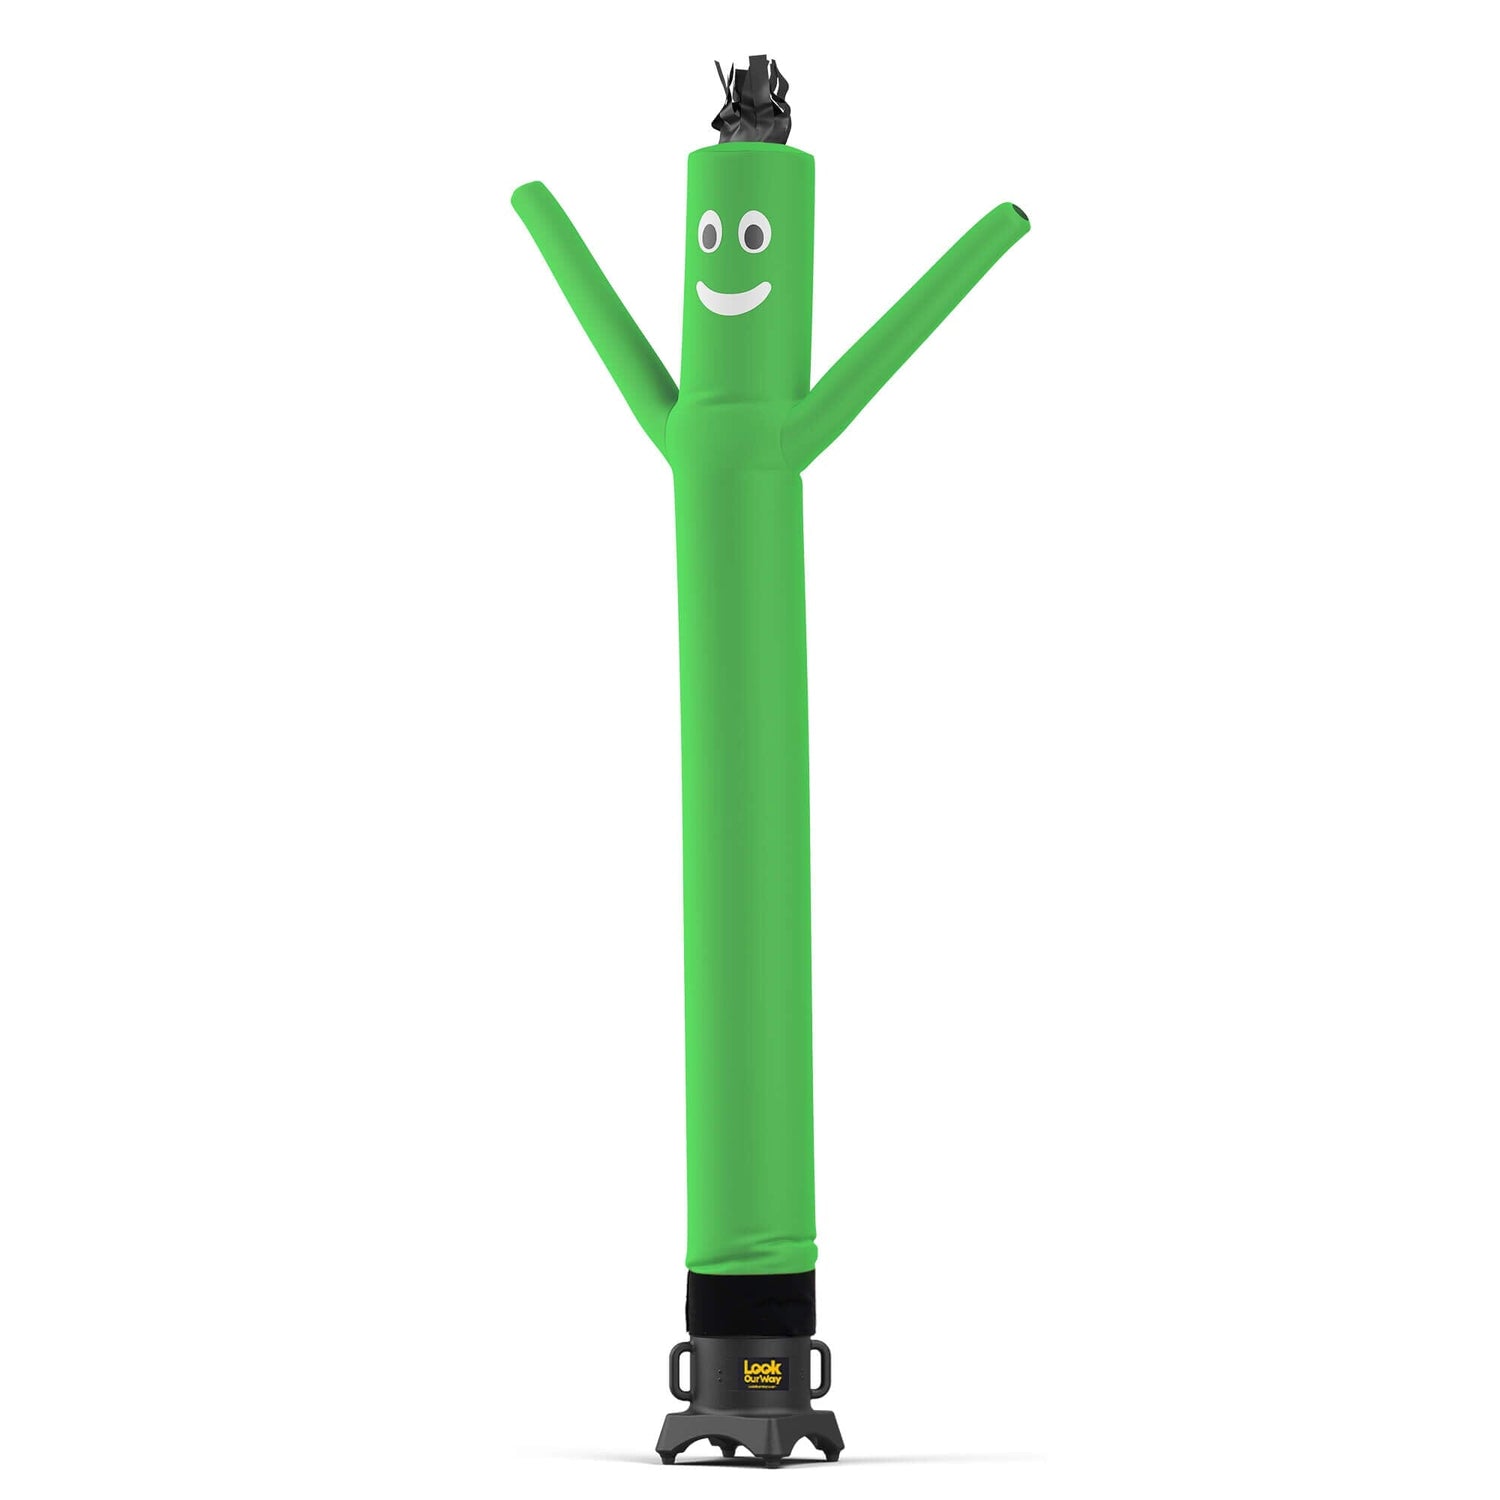 Air Dancers® Inflatable Tube Man Green 11M0200116-B